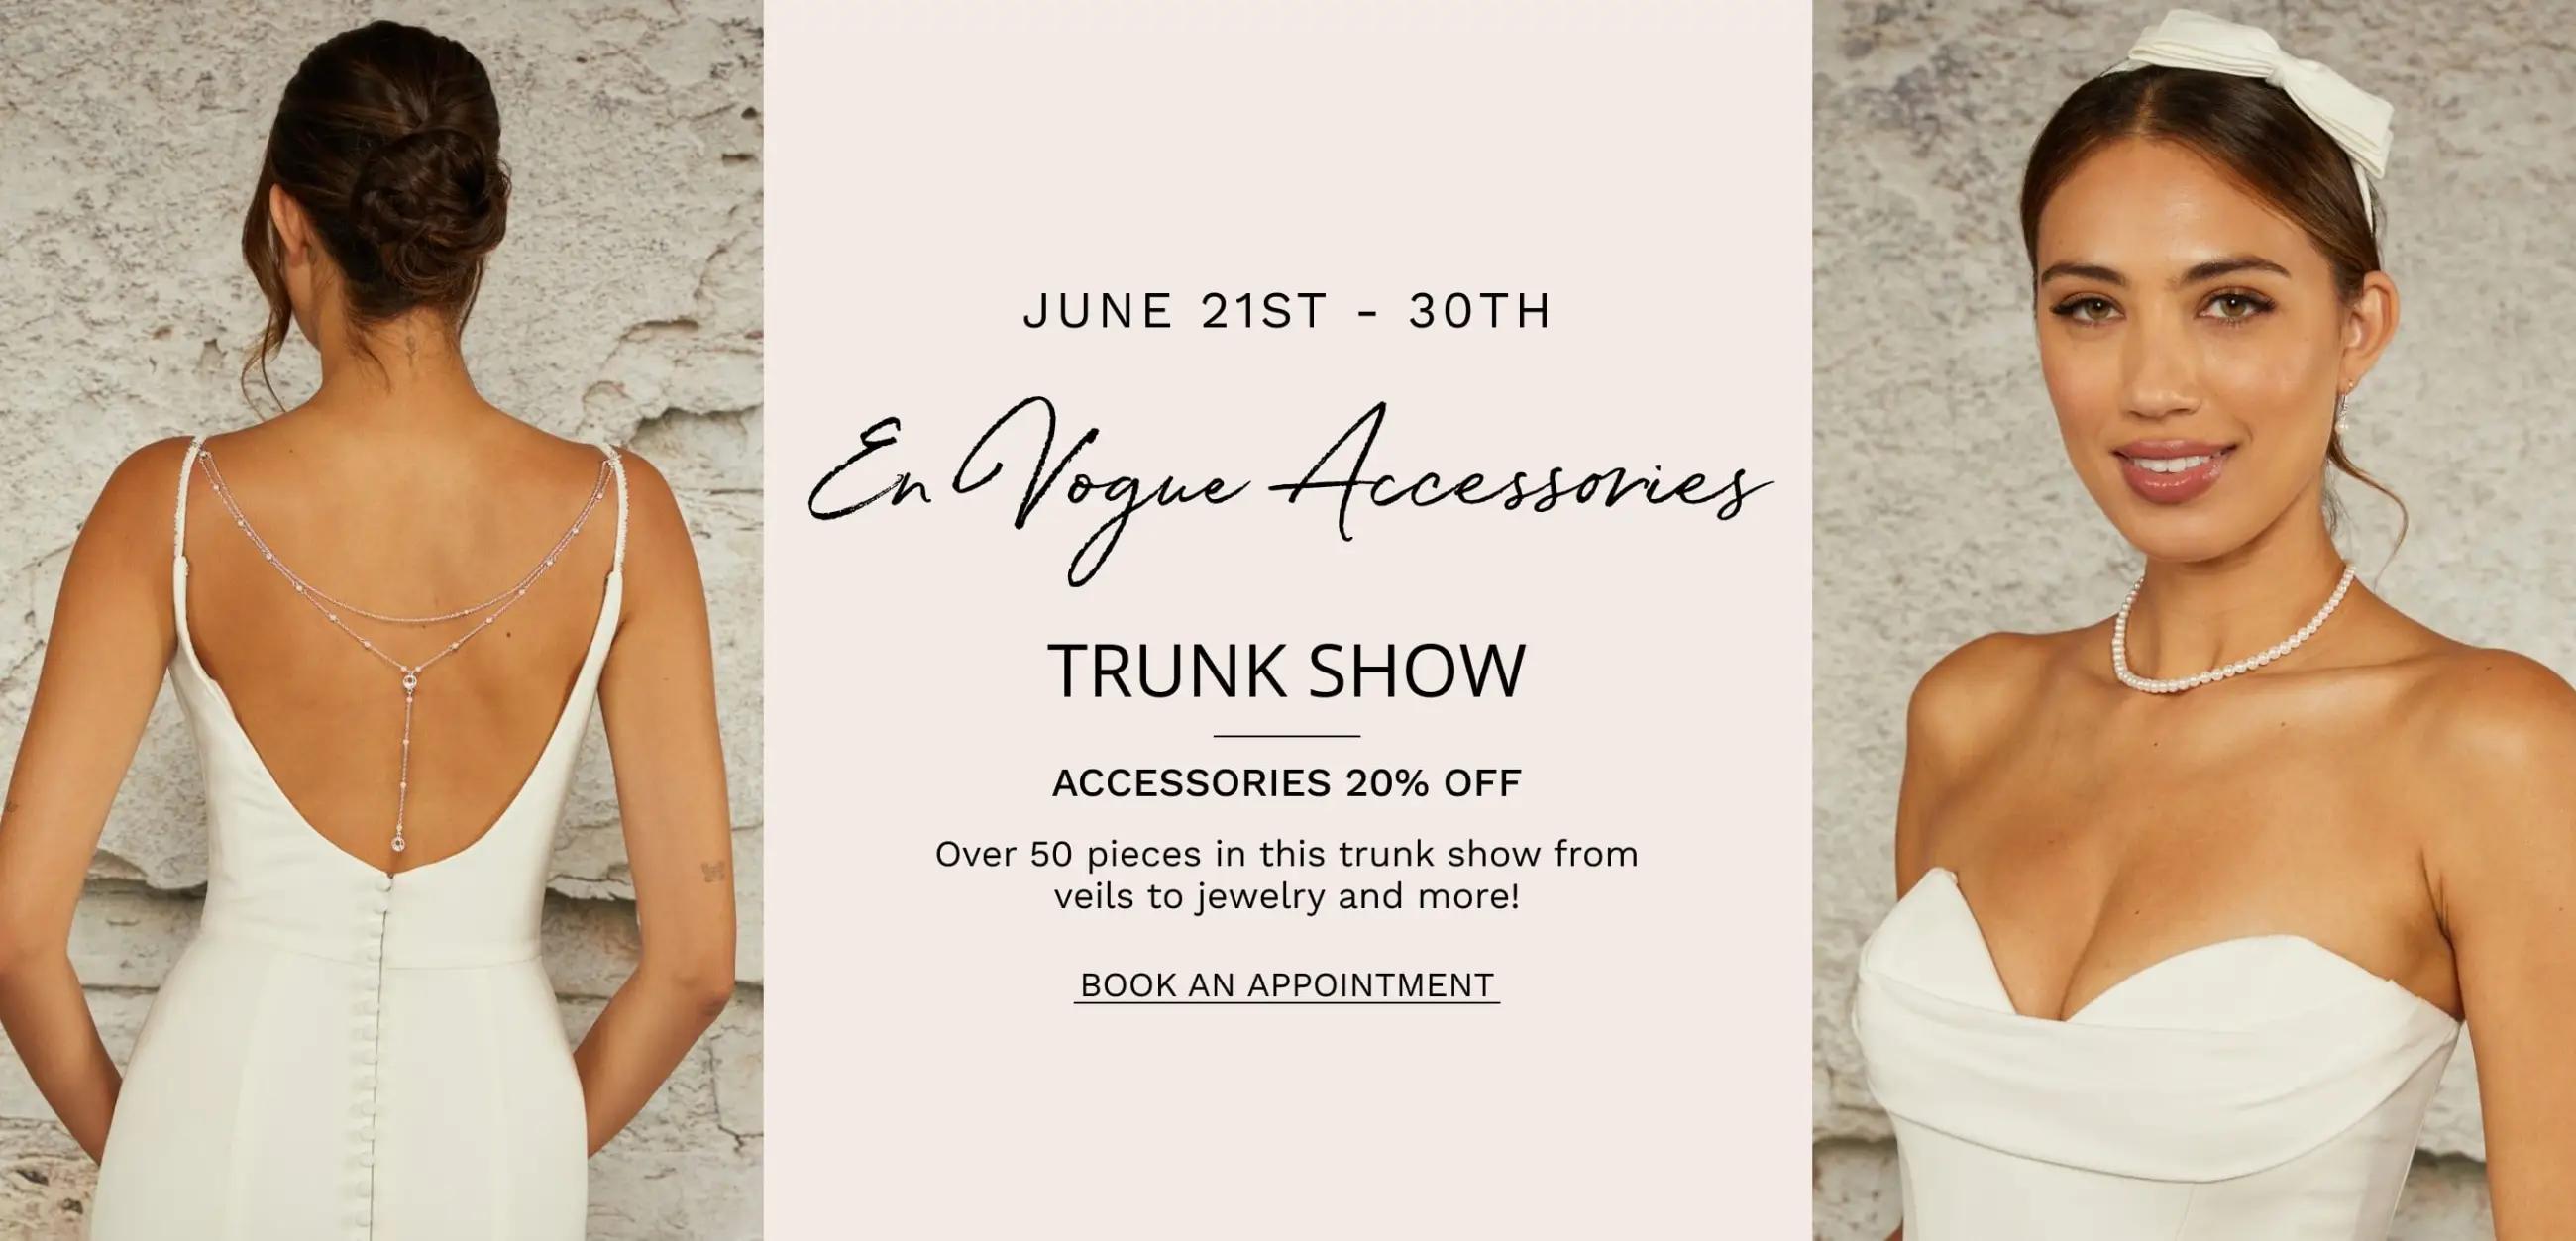 EnVogue Accessories trunk show at Dublin Bridal - June 21st - 30th